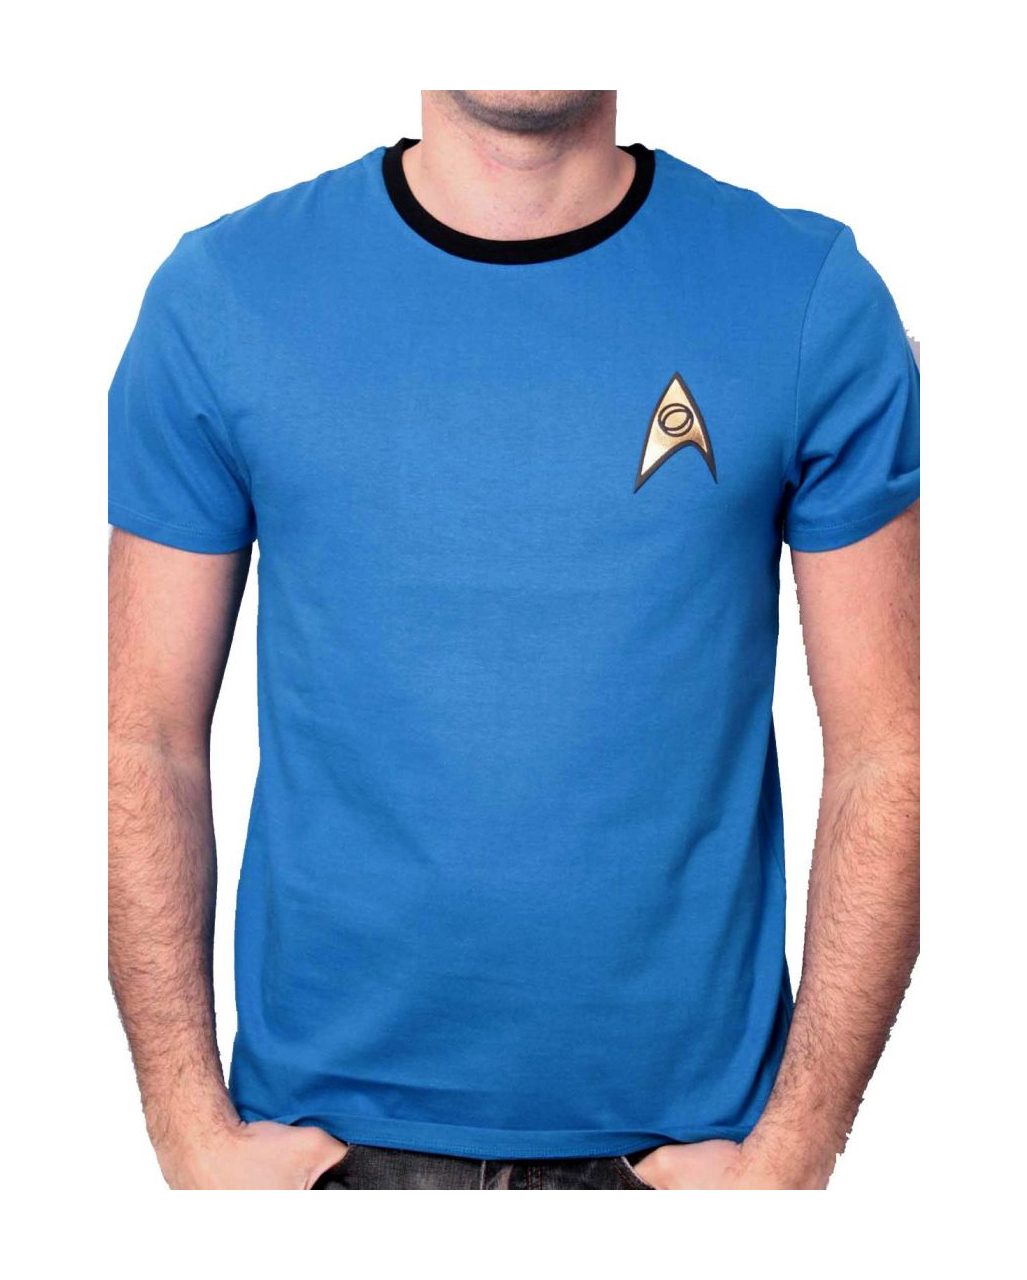 star trek merchandise t shirt